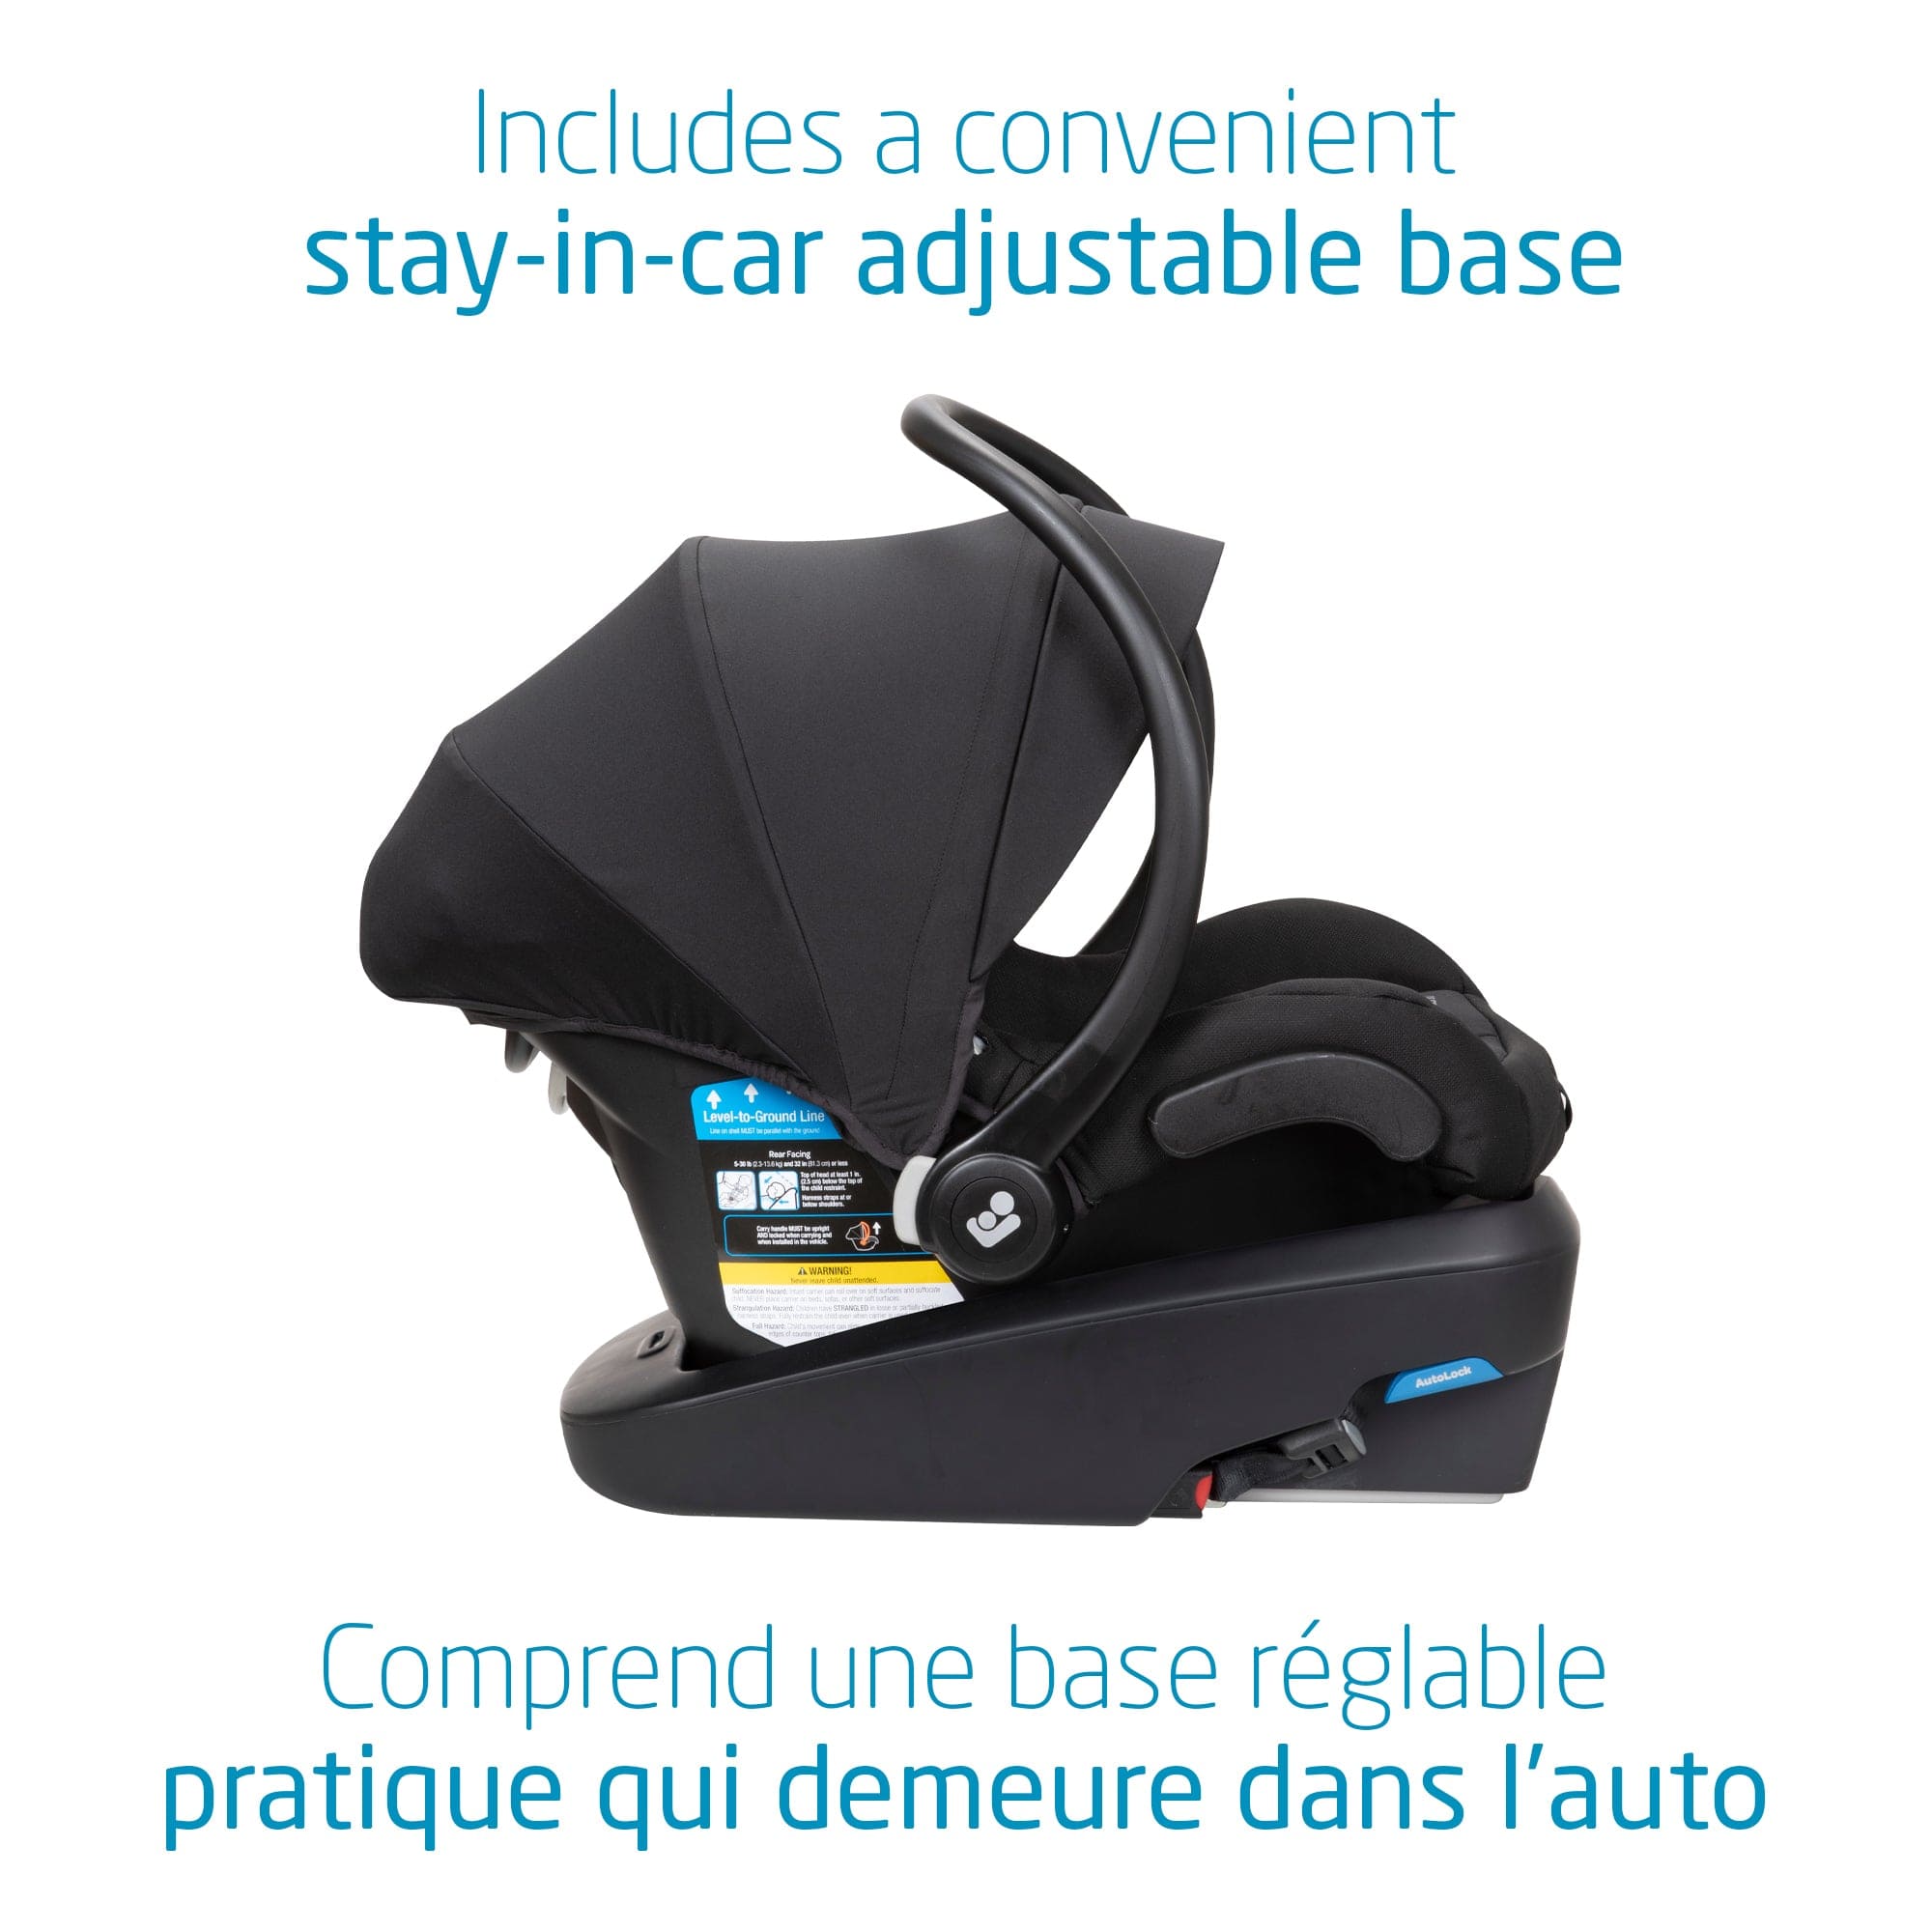 Maxi-Cosi infant car seat Maxi-Cosi Mico 30 Infant Car Seat - Midnight Black